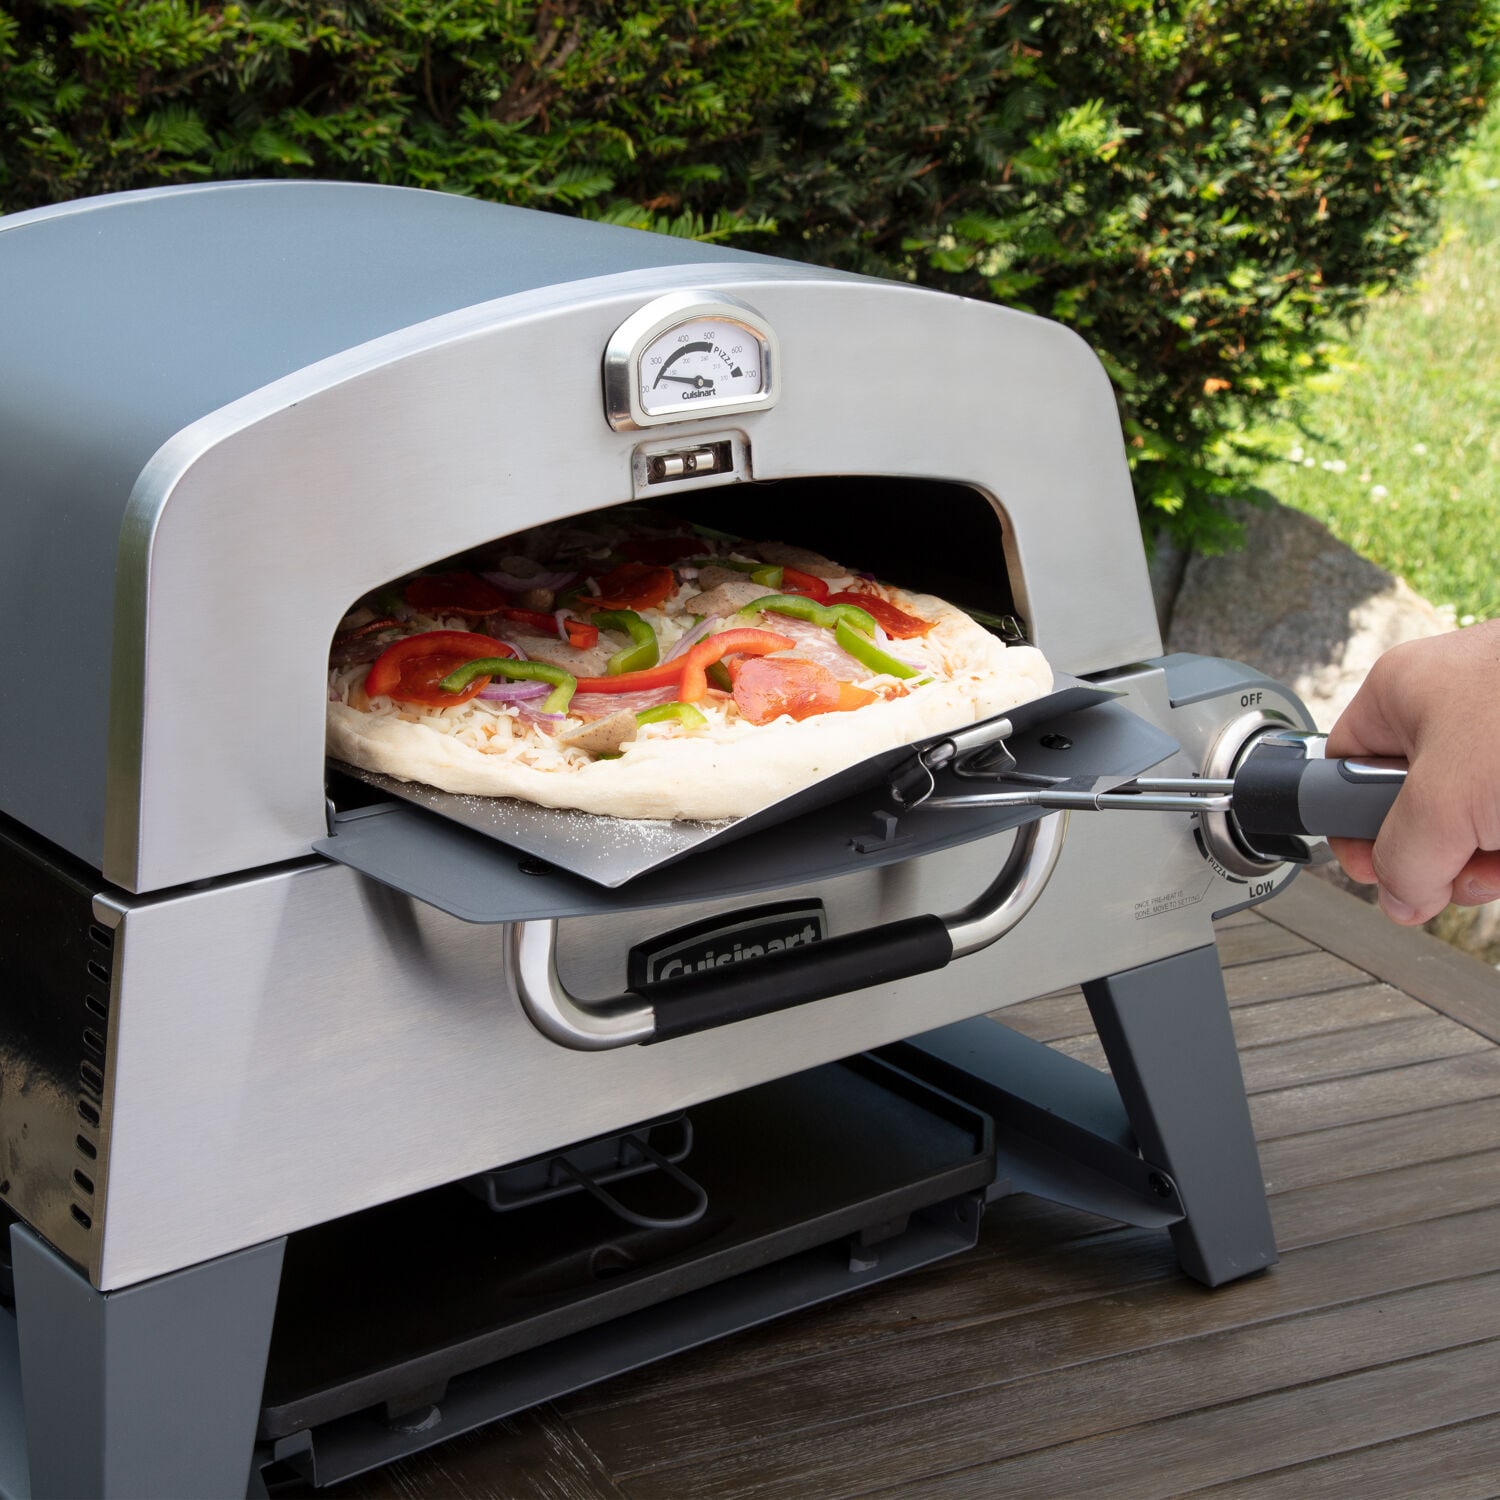 Outdoor 3-in-1 Pizza Oven